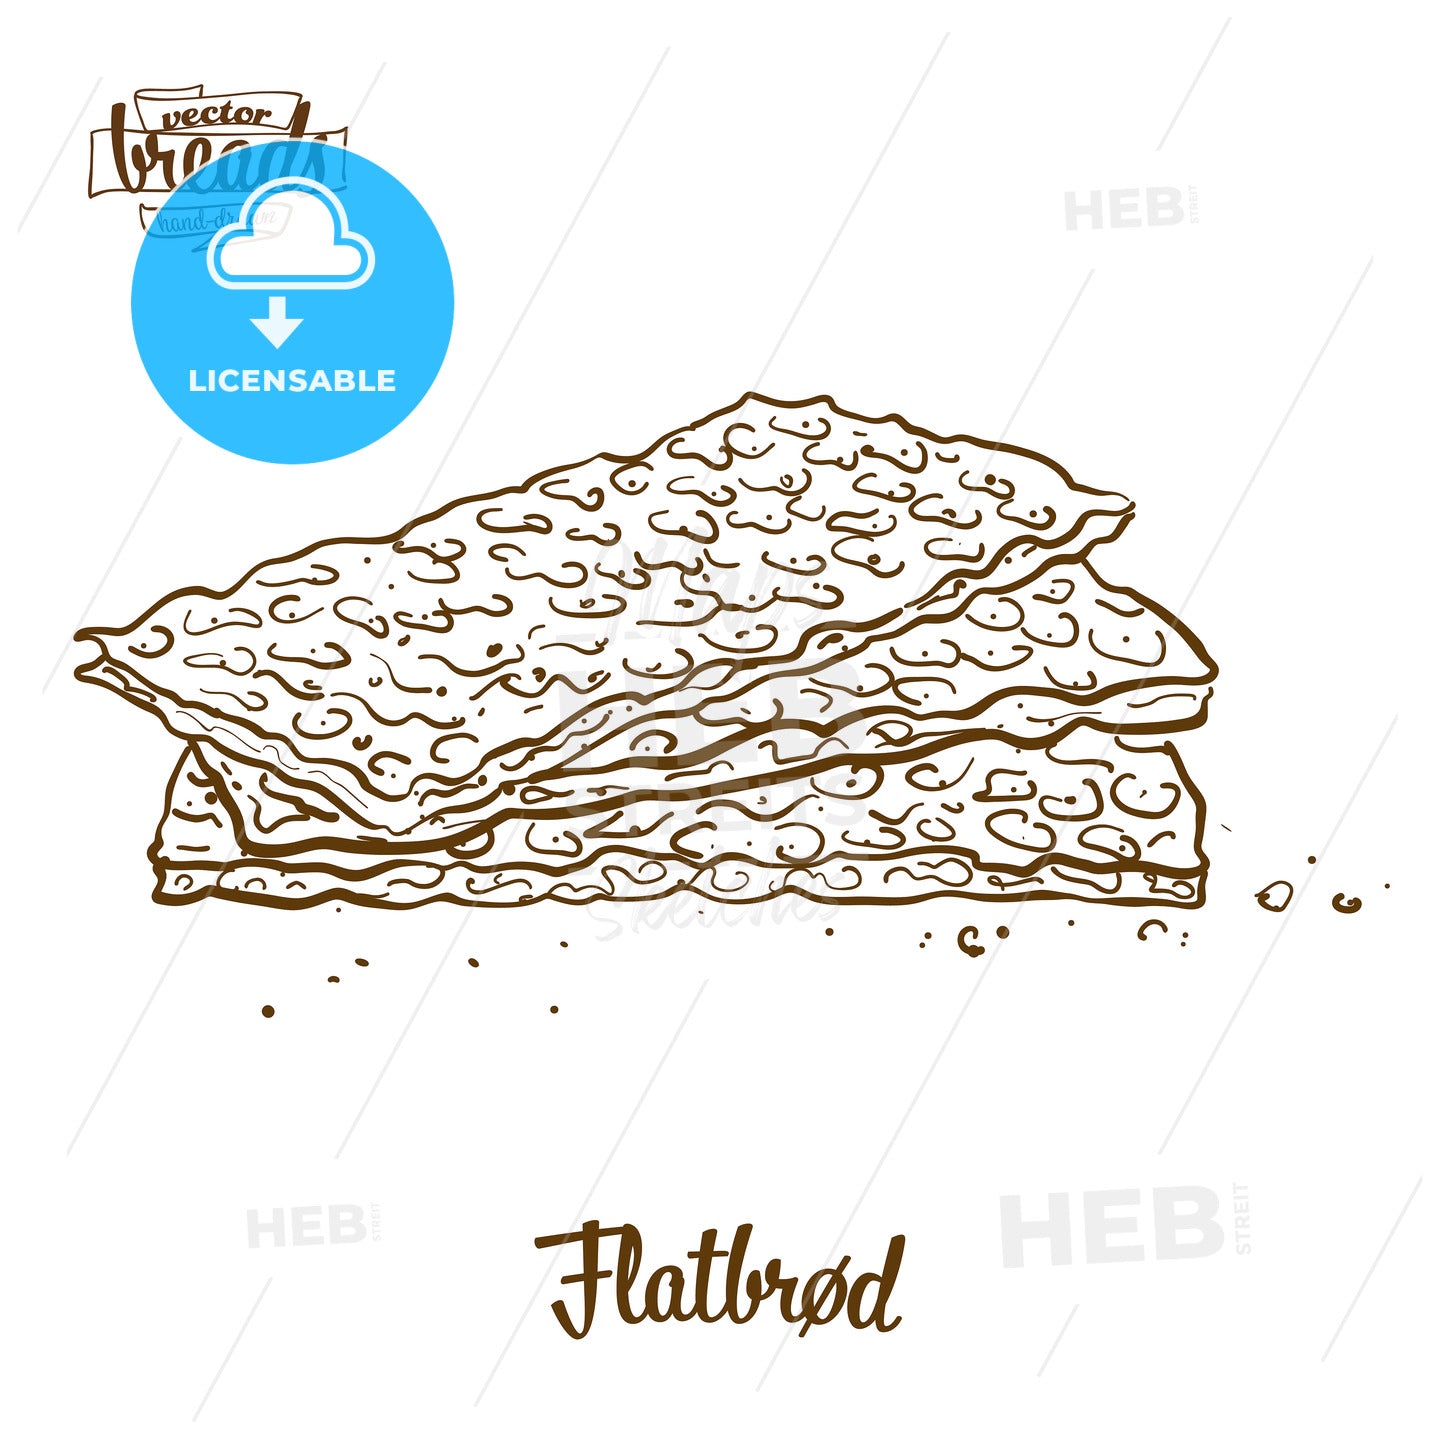 Flatbrød bread vector drawing – instant download